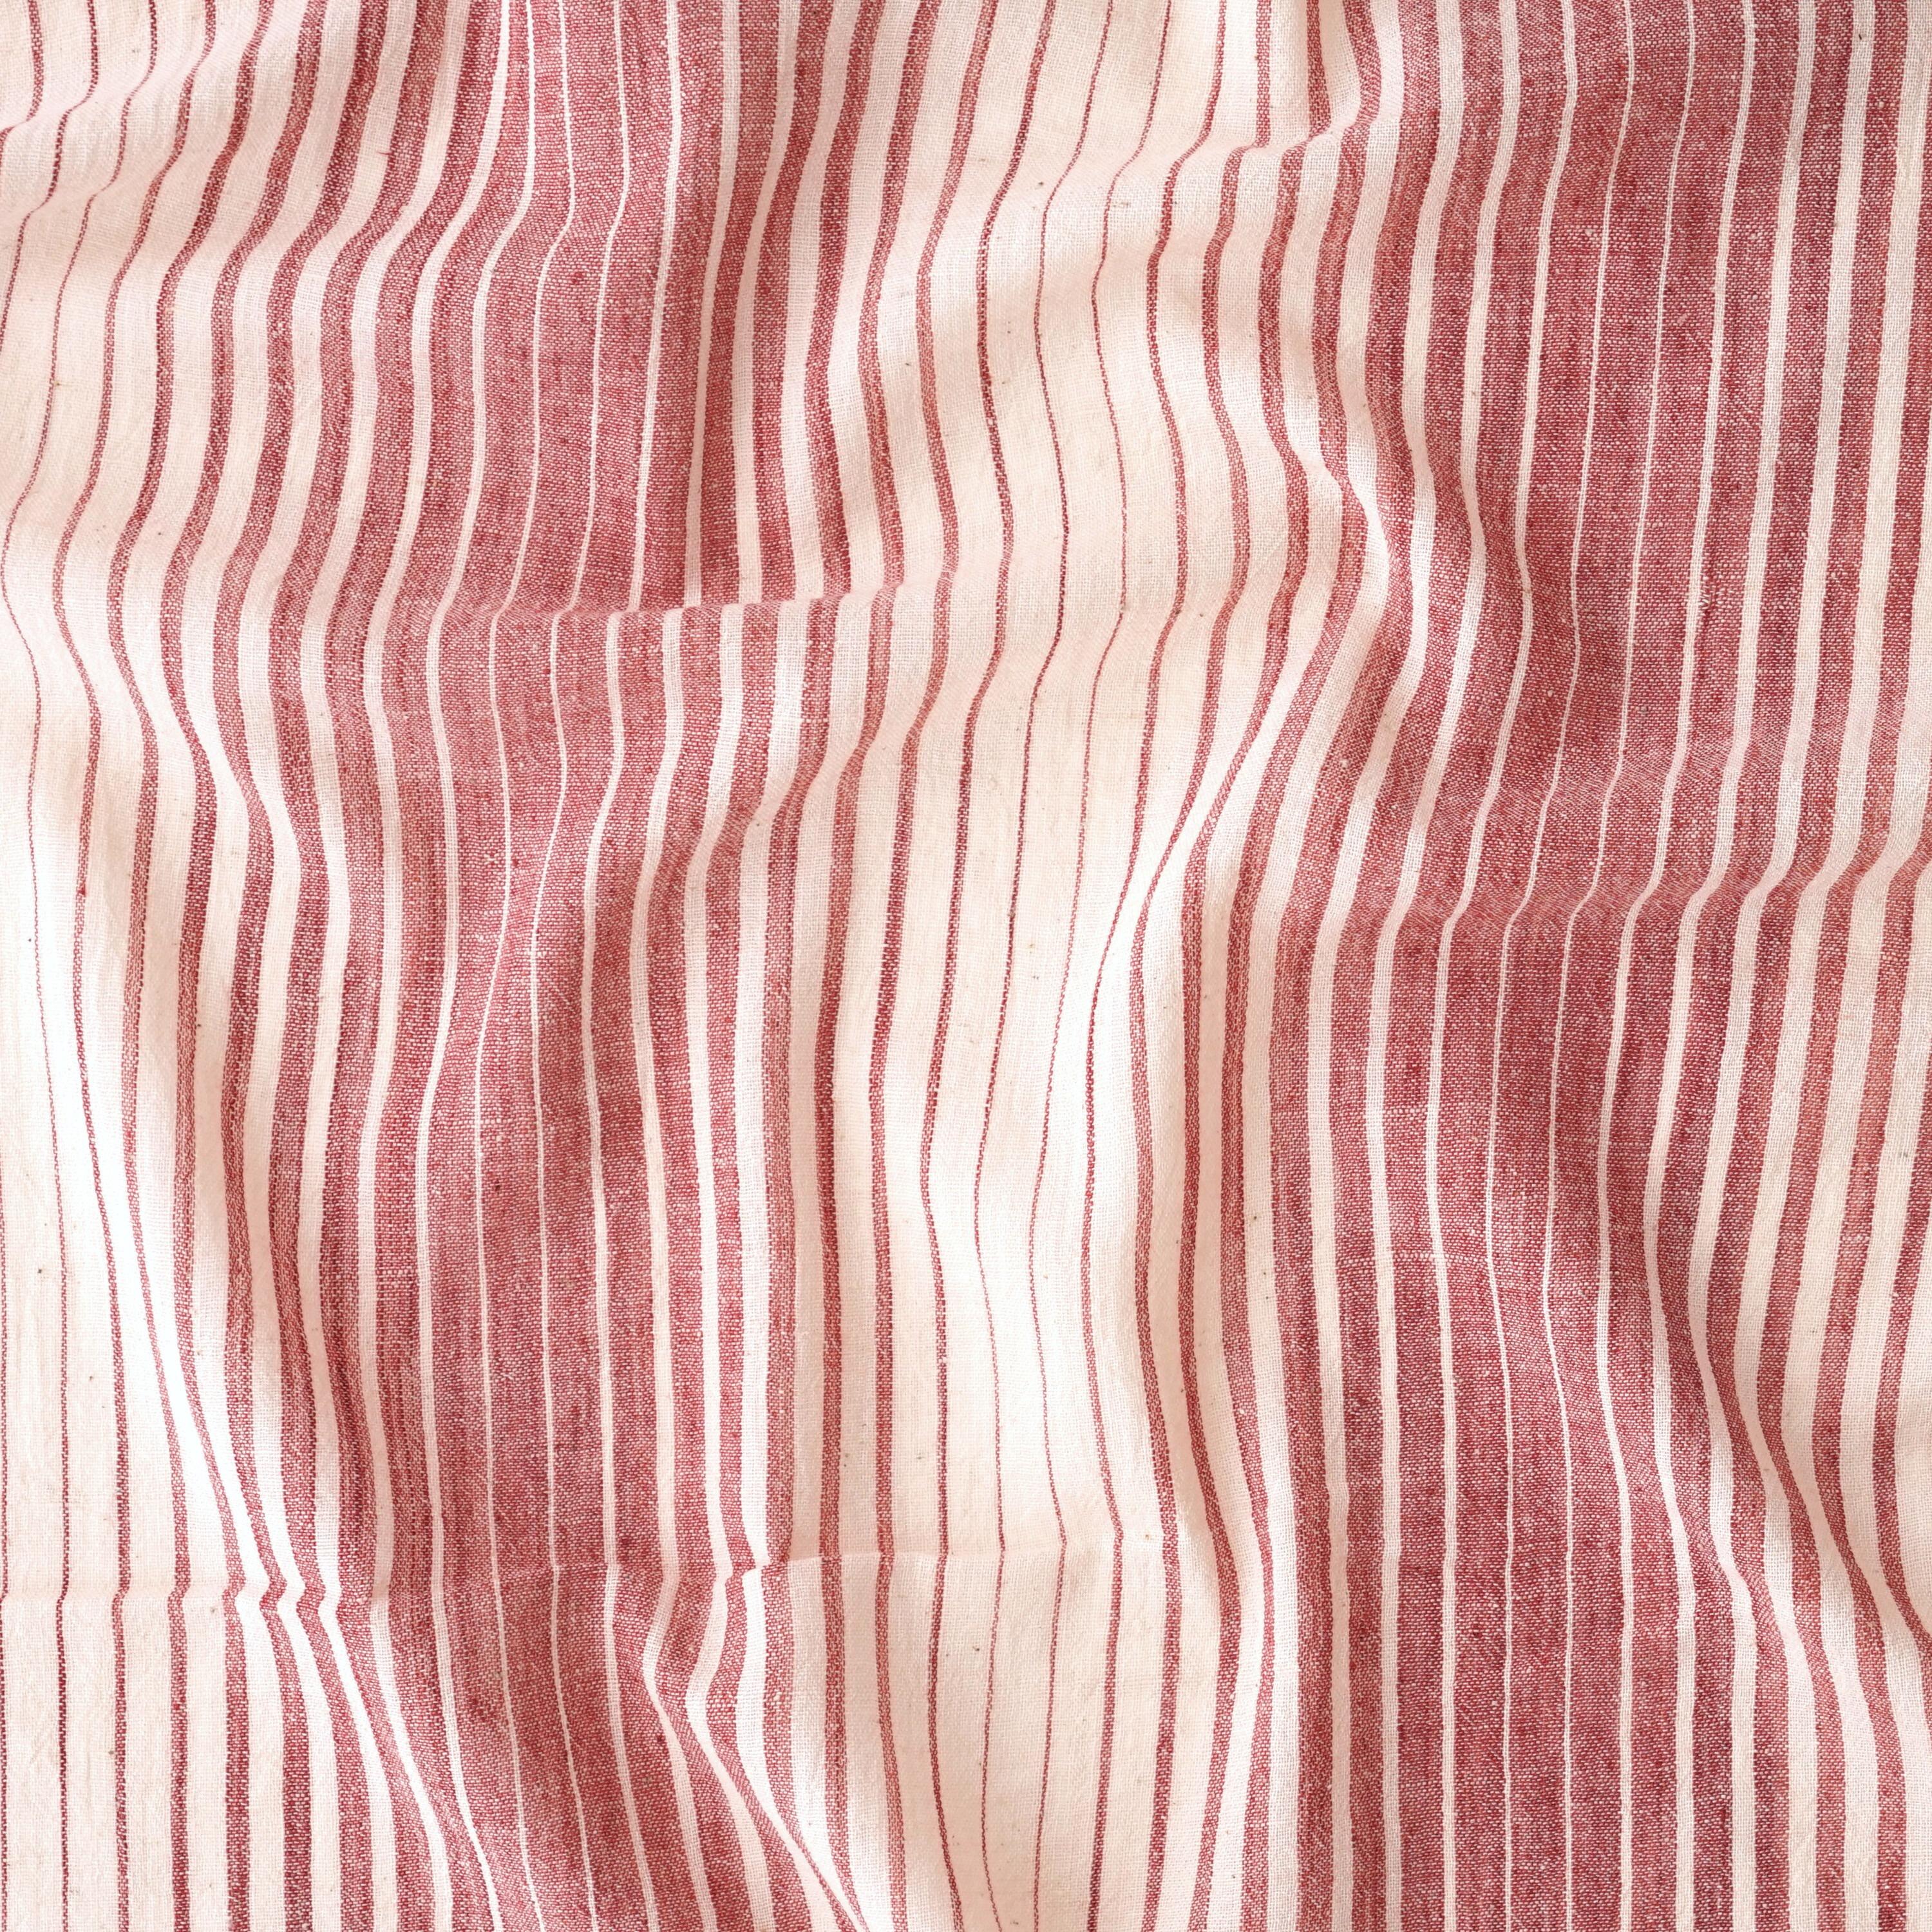 KHE04 - Organic Kala Cotton - Handloom Woven - Natural Dye - Red Alizarin Dye - Fading Stripes - One By One - Contrast